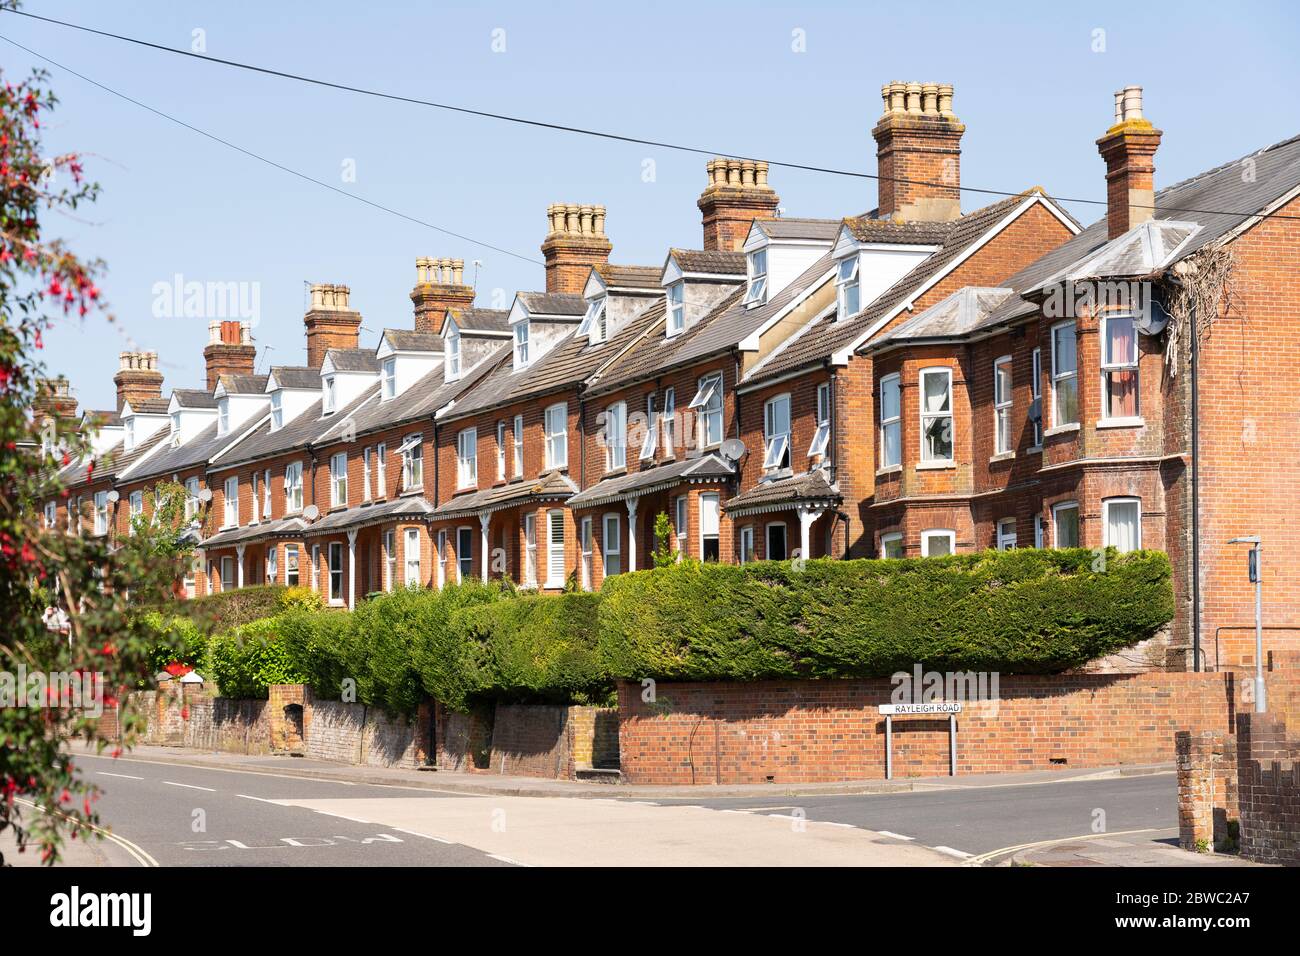 Victorian terraced housing in Basingstoke, UK. Theme - rental market, housing market, UK house prices, landlords, landlord, letting, renting Stock Photo